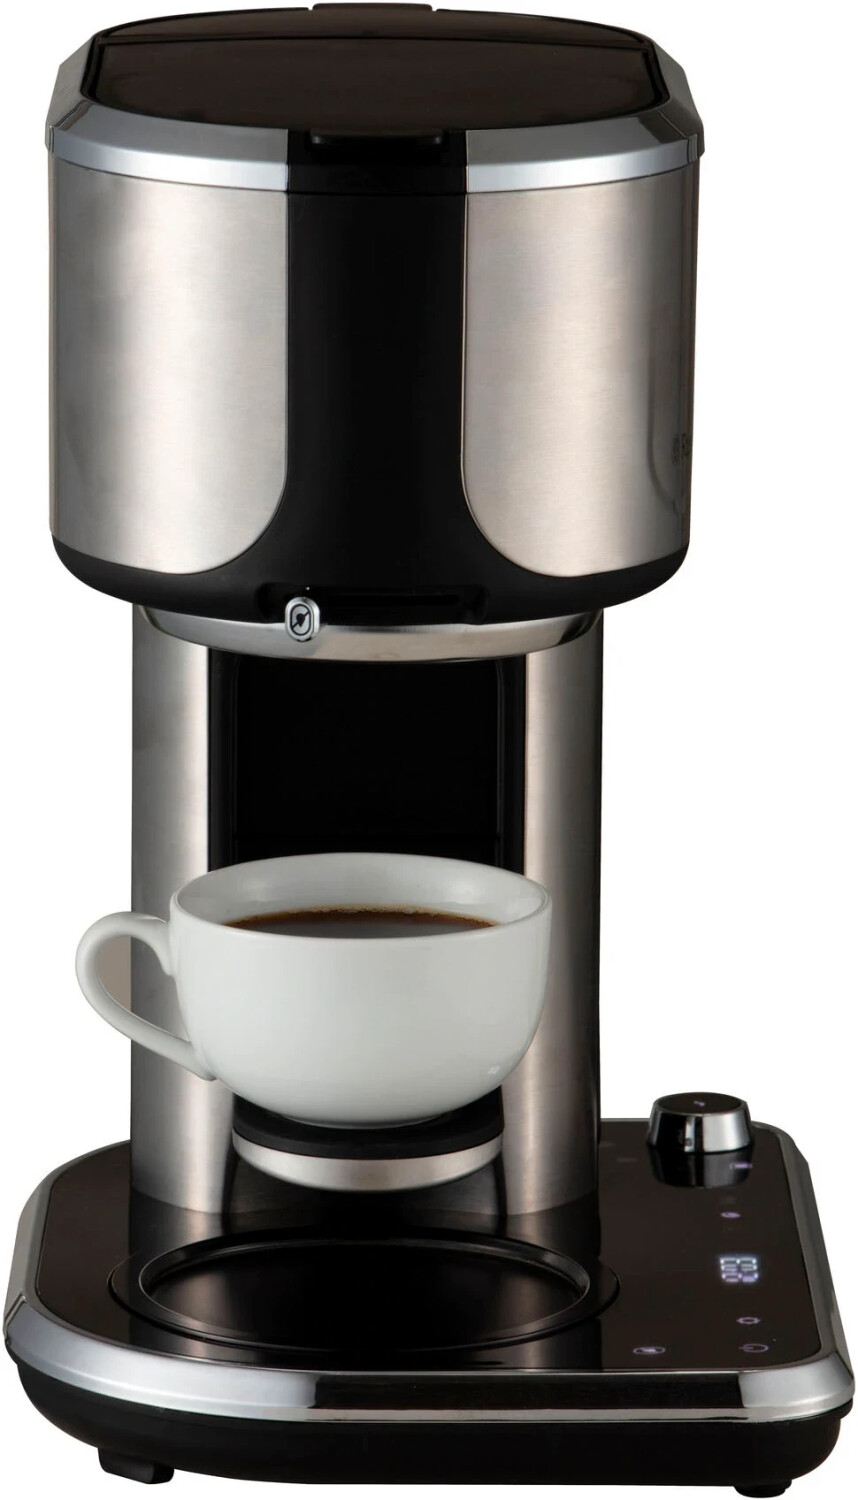 | bei Preisvergleich Hobbs 26230-56 Filterkaffeemaschine Attentiv Bar ab Russell 129,99 Coffee €